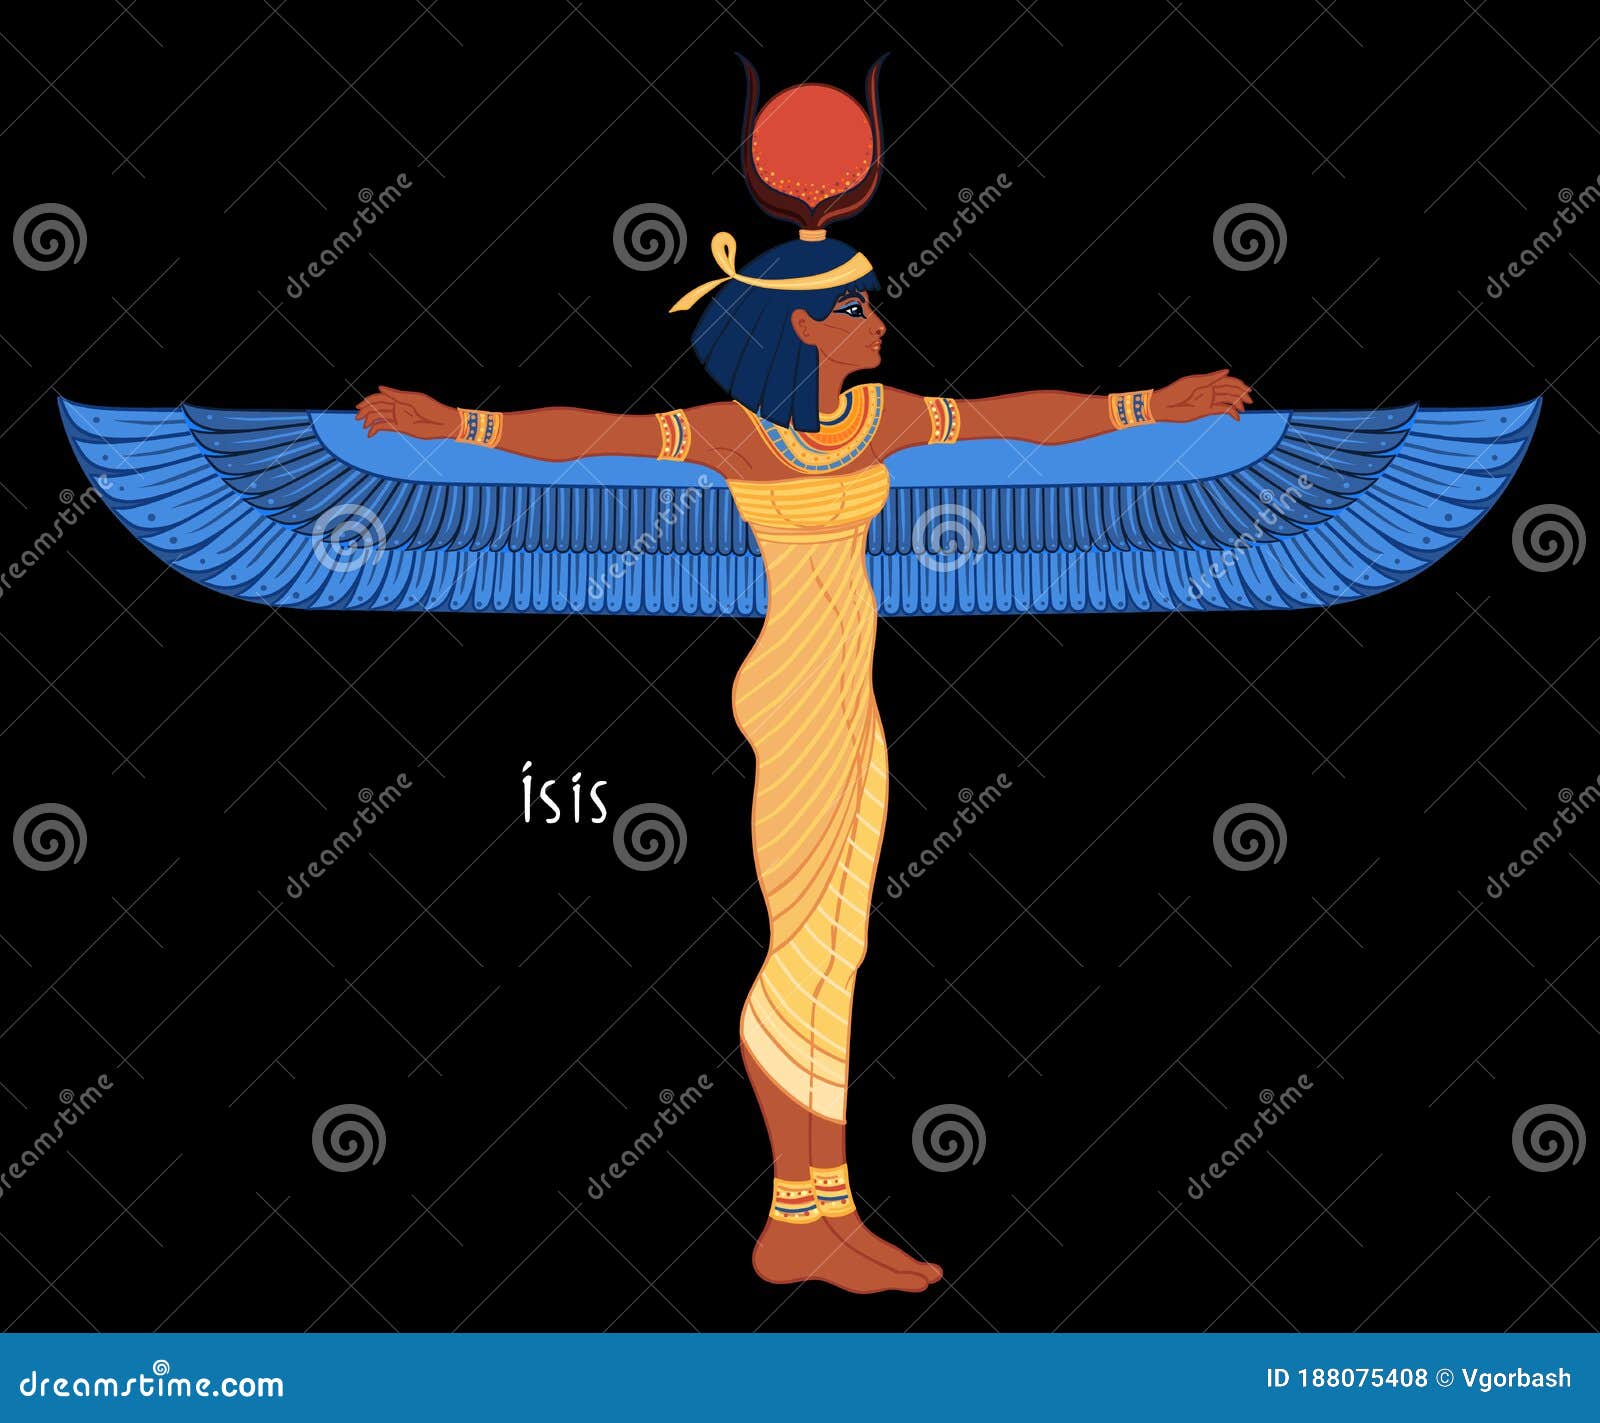 Isis Goddess Of Life And Magic In Egyptian Mythology One Of The